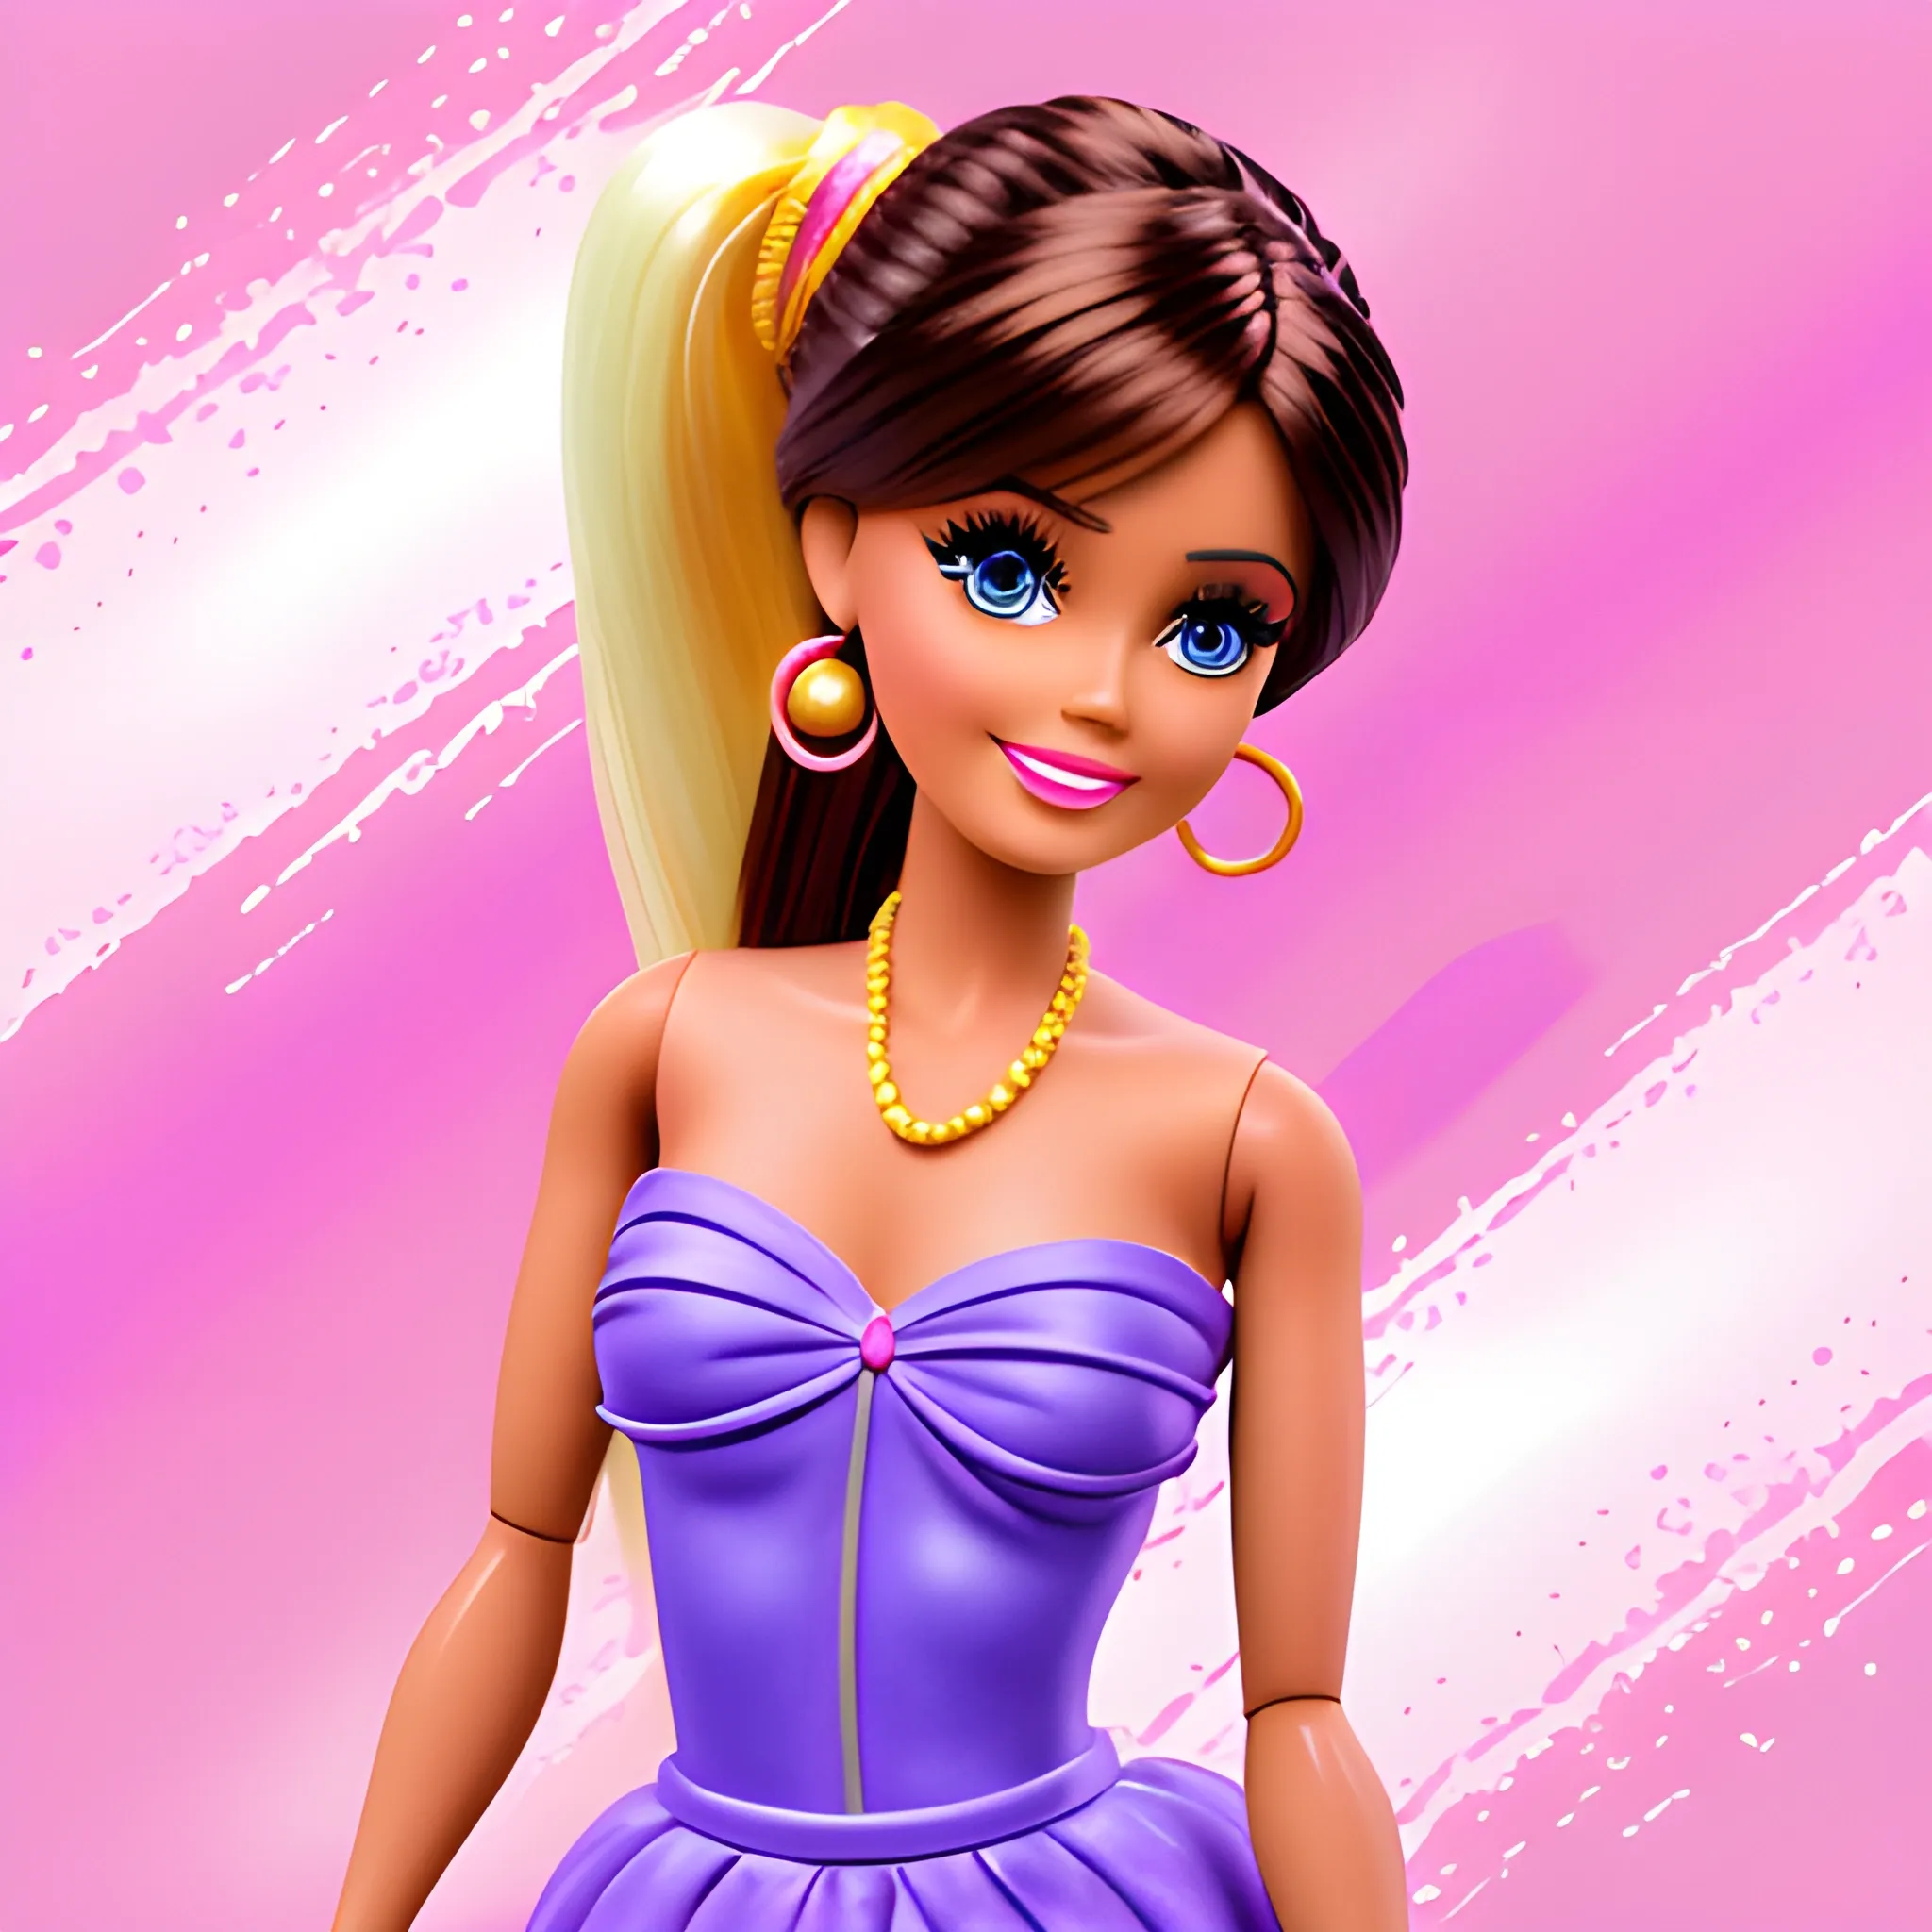 Cute barbie, Aladdin, happy, positive attitude, affectionate big violet eyes, brown eyes and brown hair, Barbie, pop art, barbie vector, barbie fantasy, concept art, 4k resolution, half body

, Water Color